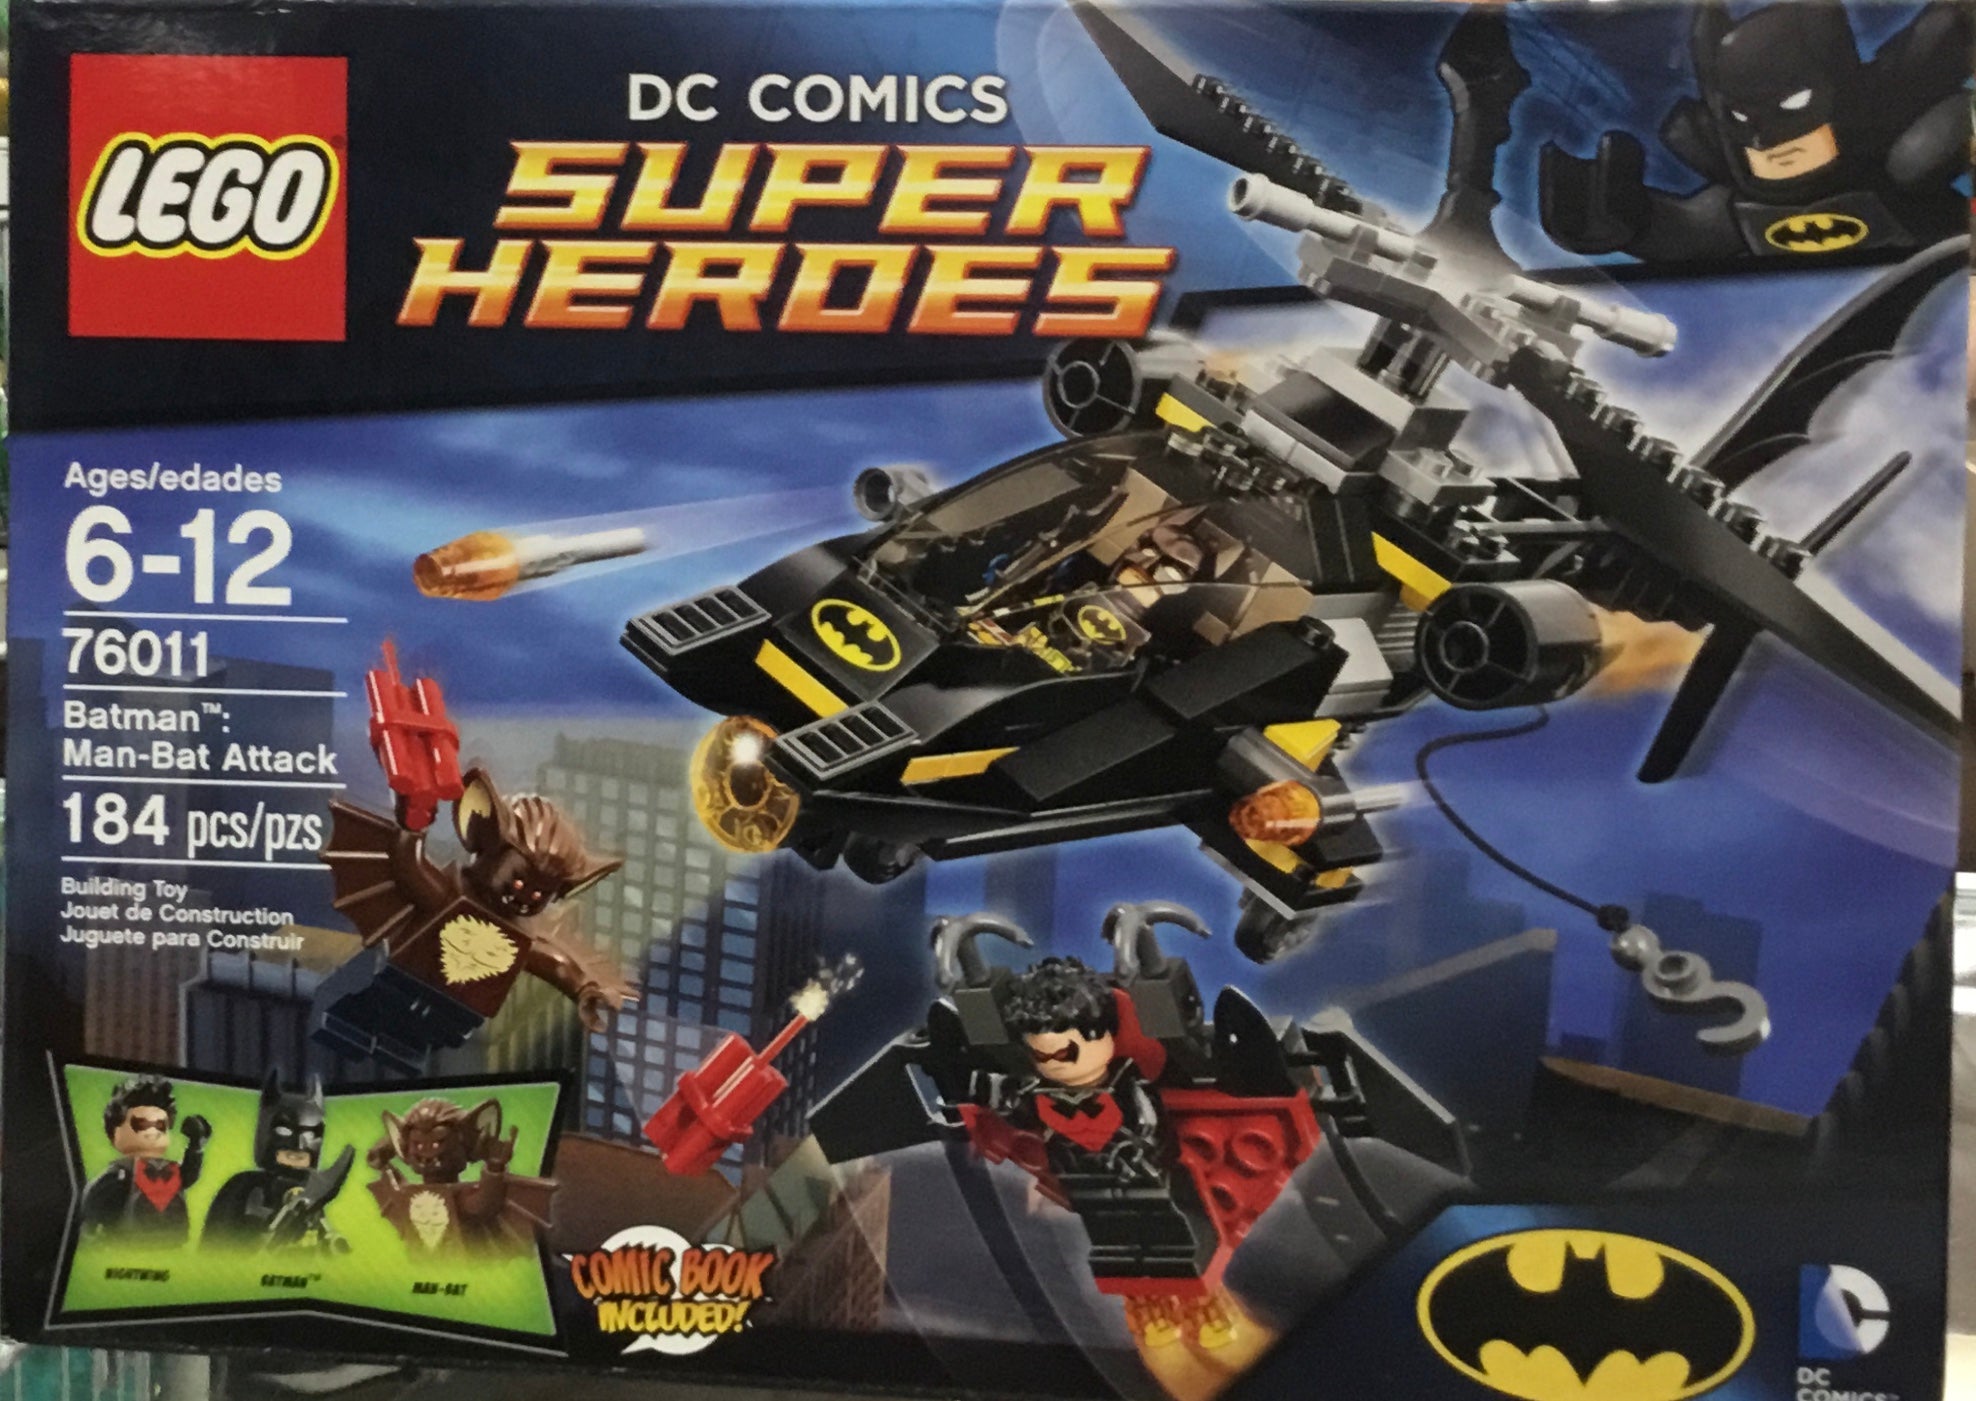  LEGO Superheroes 76011 Batman: Man-Bat Attack : Toys